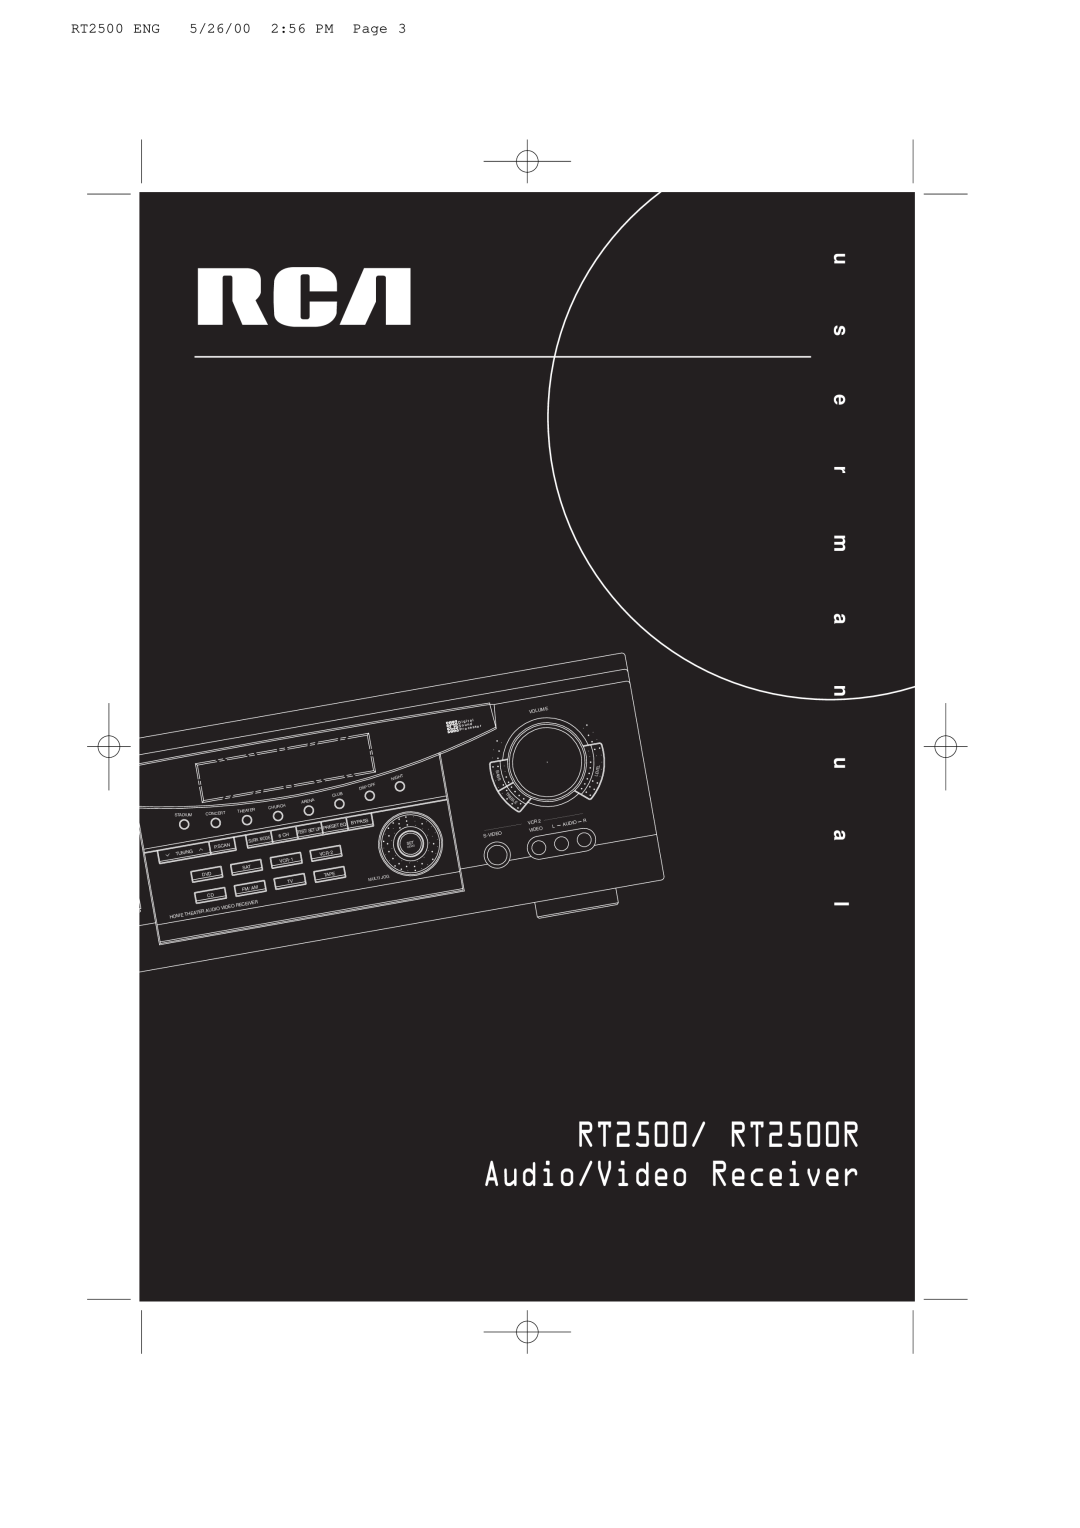 RCA user manual u s e r m a n u a l, RT2500 ENG, 5/26/00 2 56 PM Page, RT2500/ RT2500R Audio/Video Receiver, Volume 